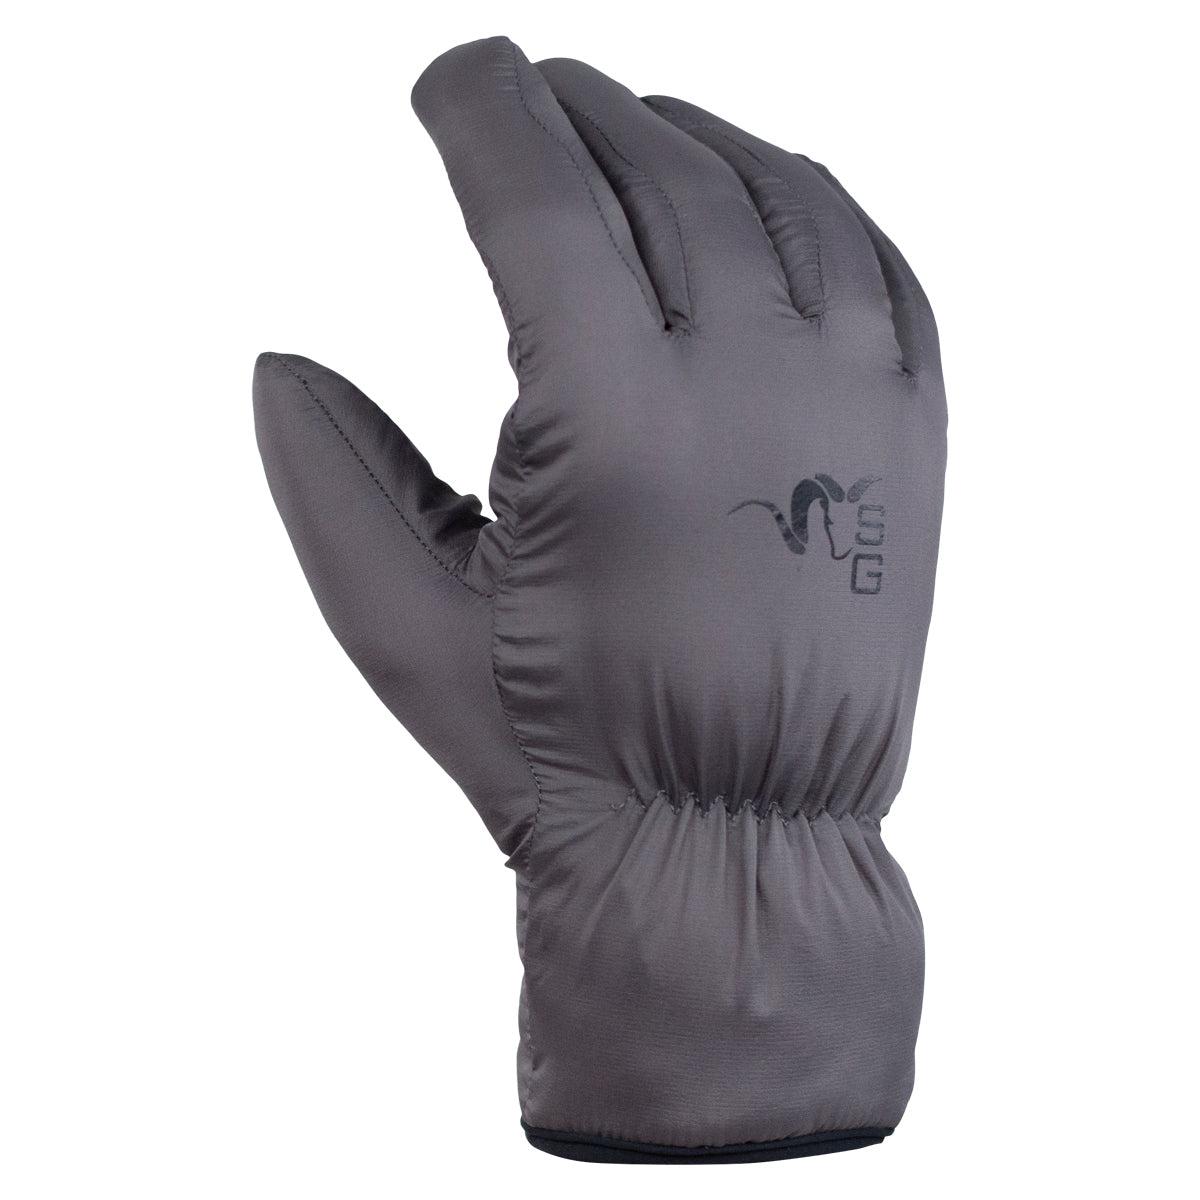 Stone Glacier Altimeter Insulated Glove in  by GOHUNT | Stone Glacier - GOHUNT Shop